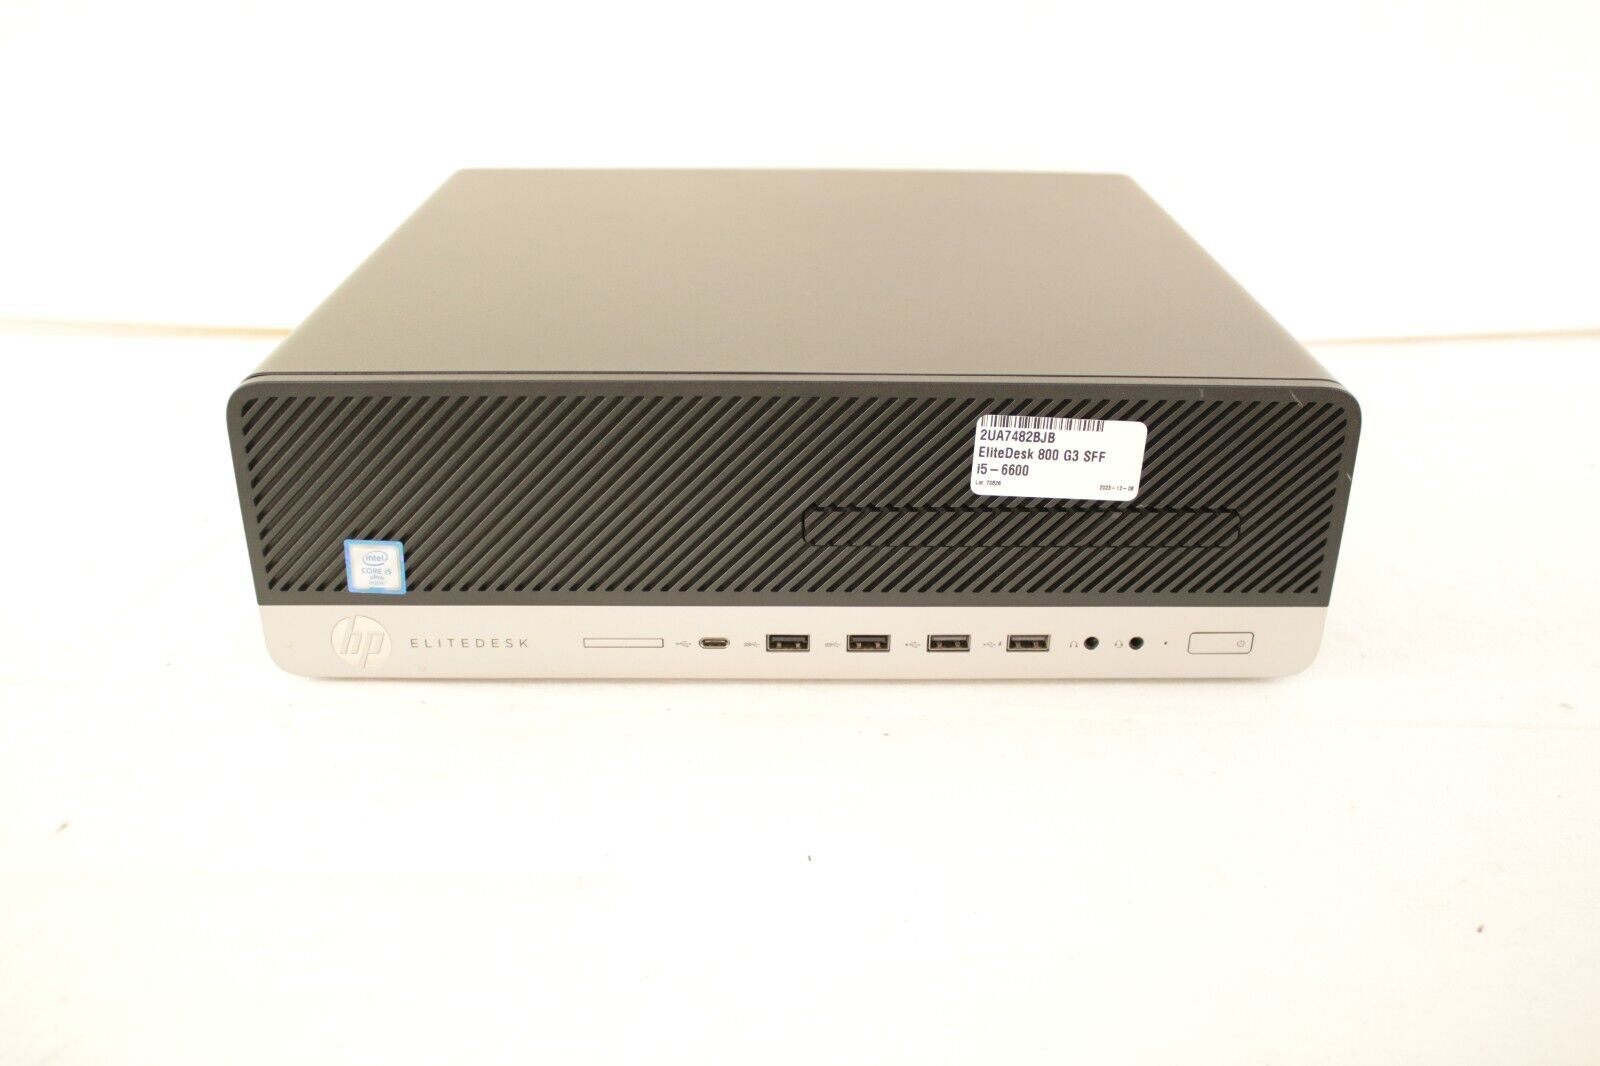 HP EliteDesk 800 G3 SFF w/ Core i5-6600 CPU - 16GB RAM - No HDD/SSD or OS